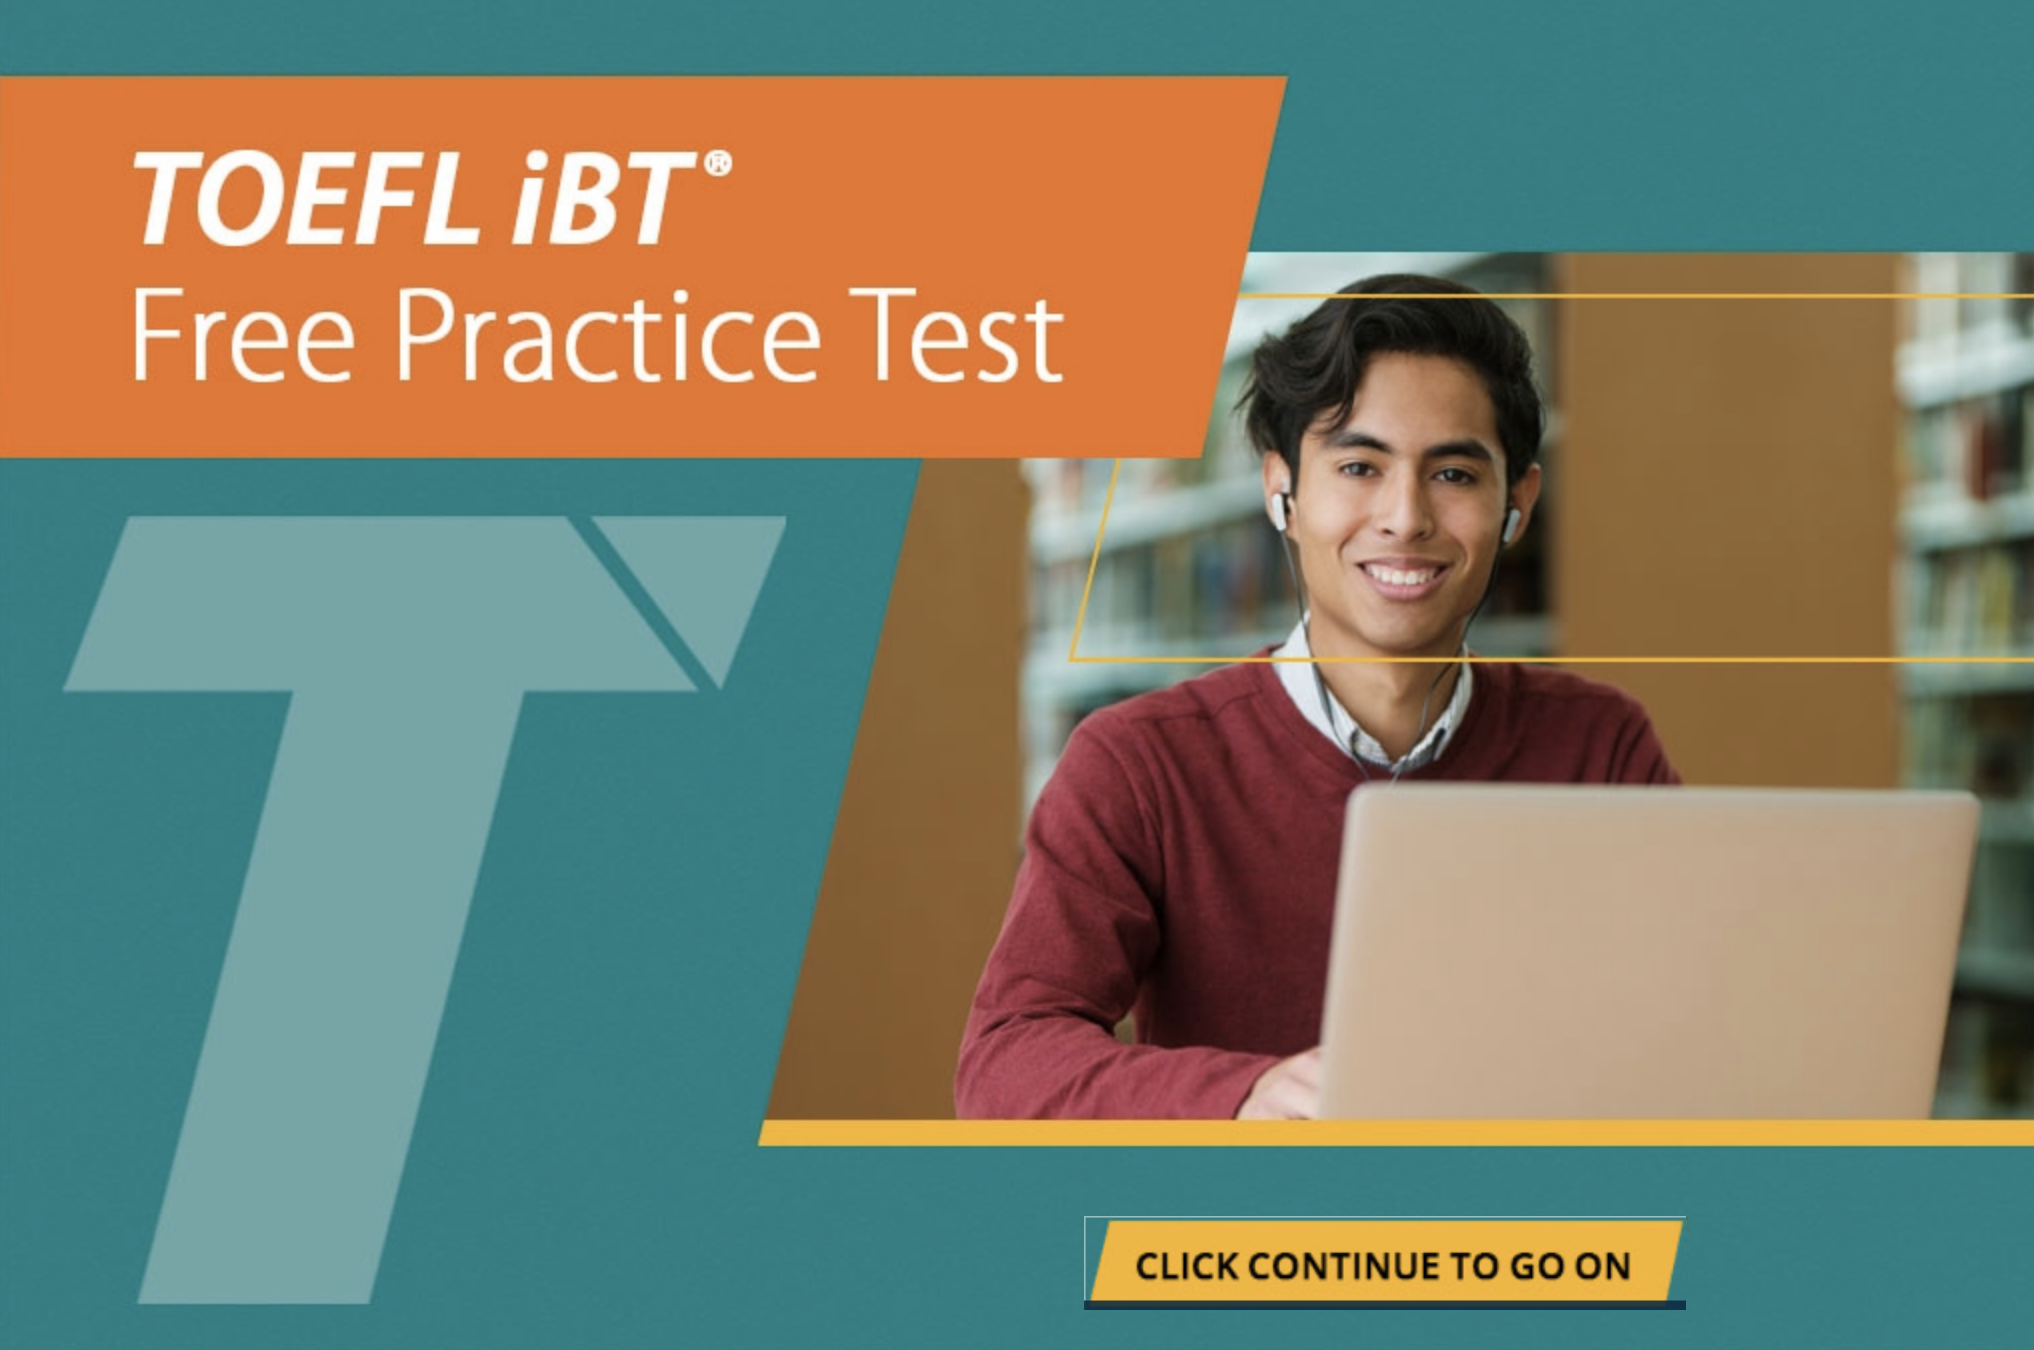 TOEFL iBT Free Practice Test